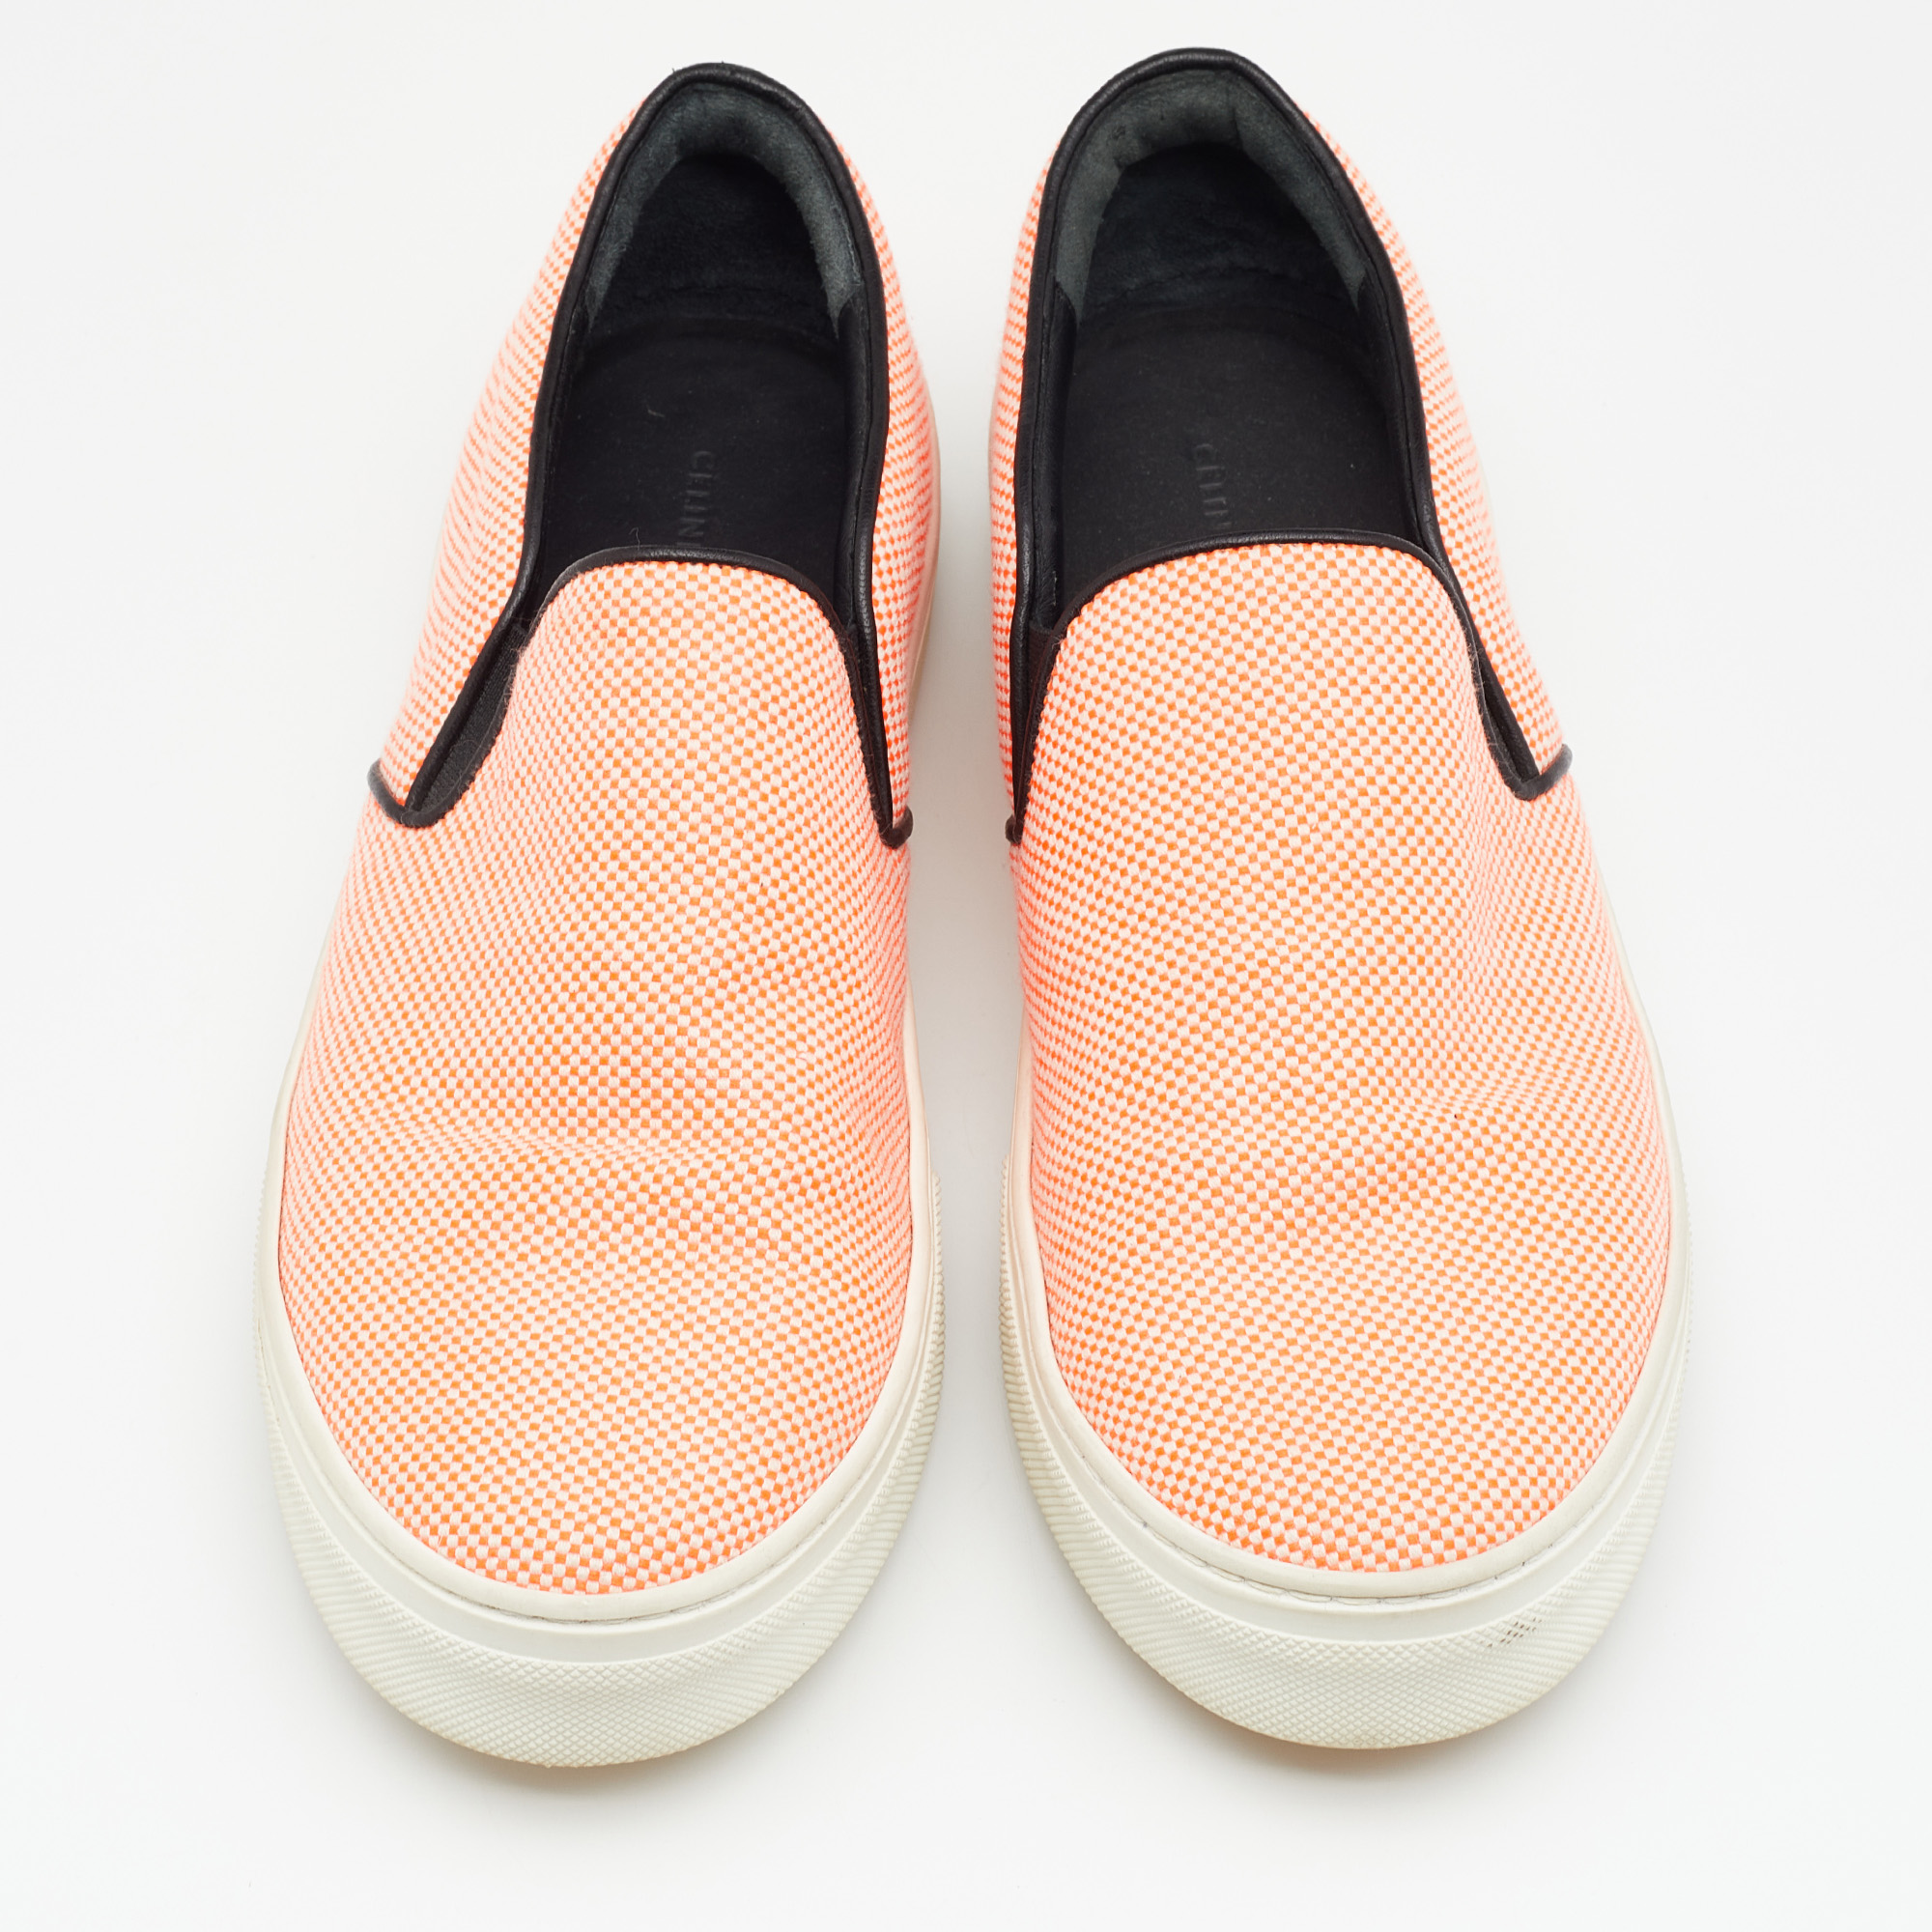 Celine Orange Canvas Slip On Sneakers Size 38